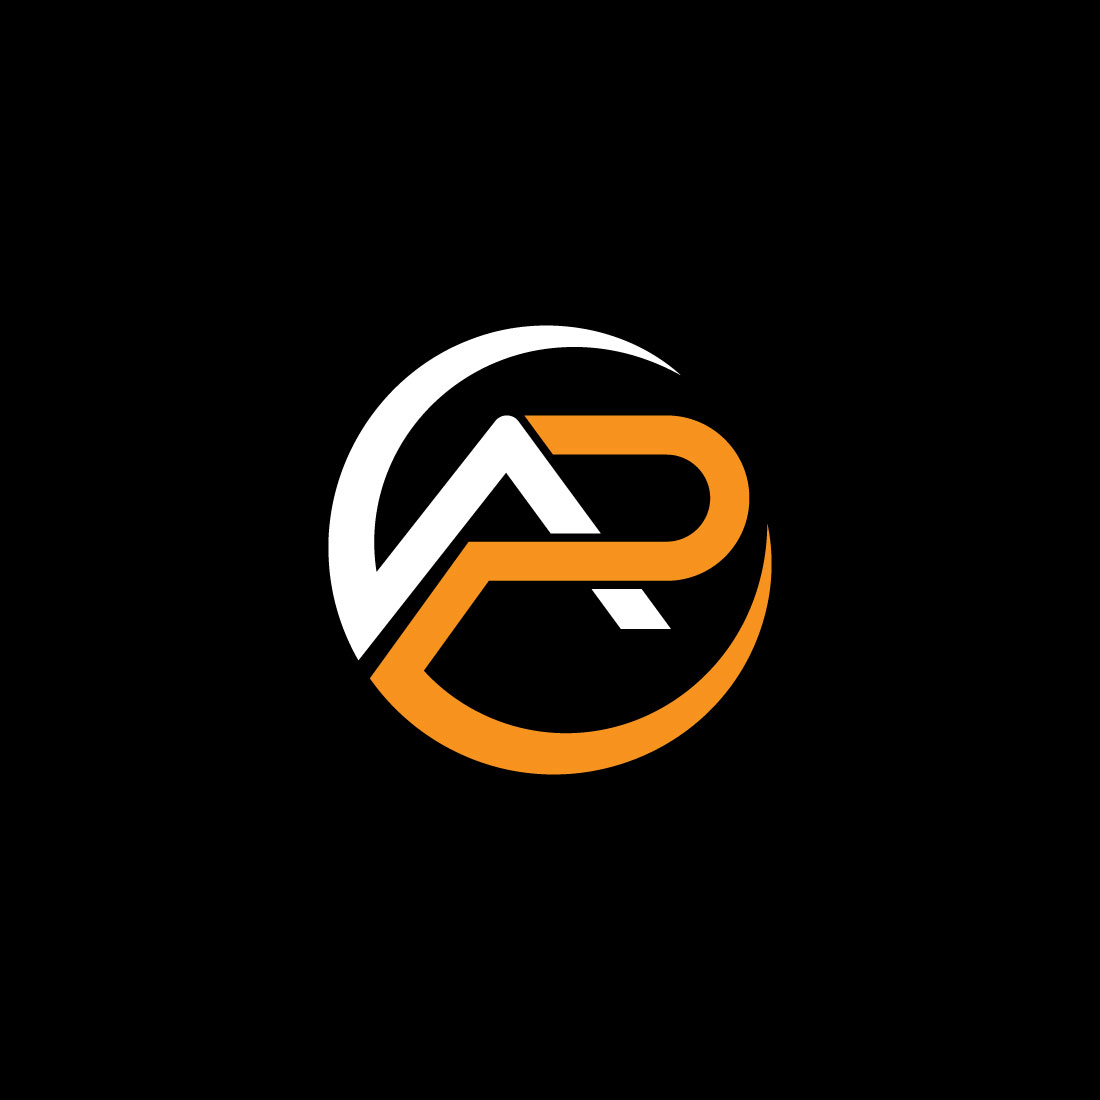 Simple Logo AP Design Template cover image.